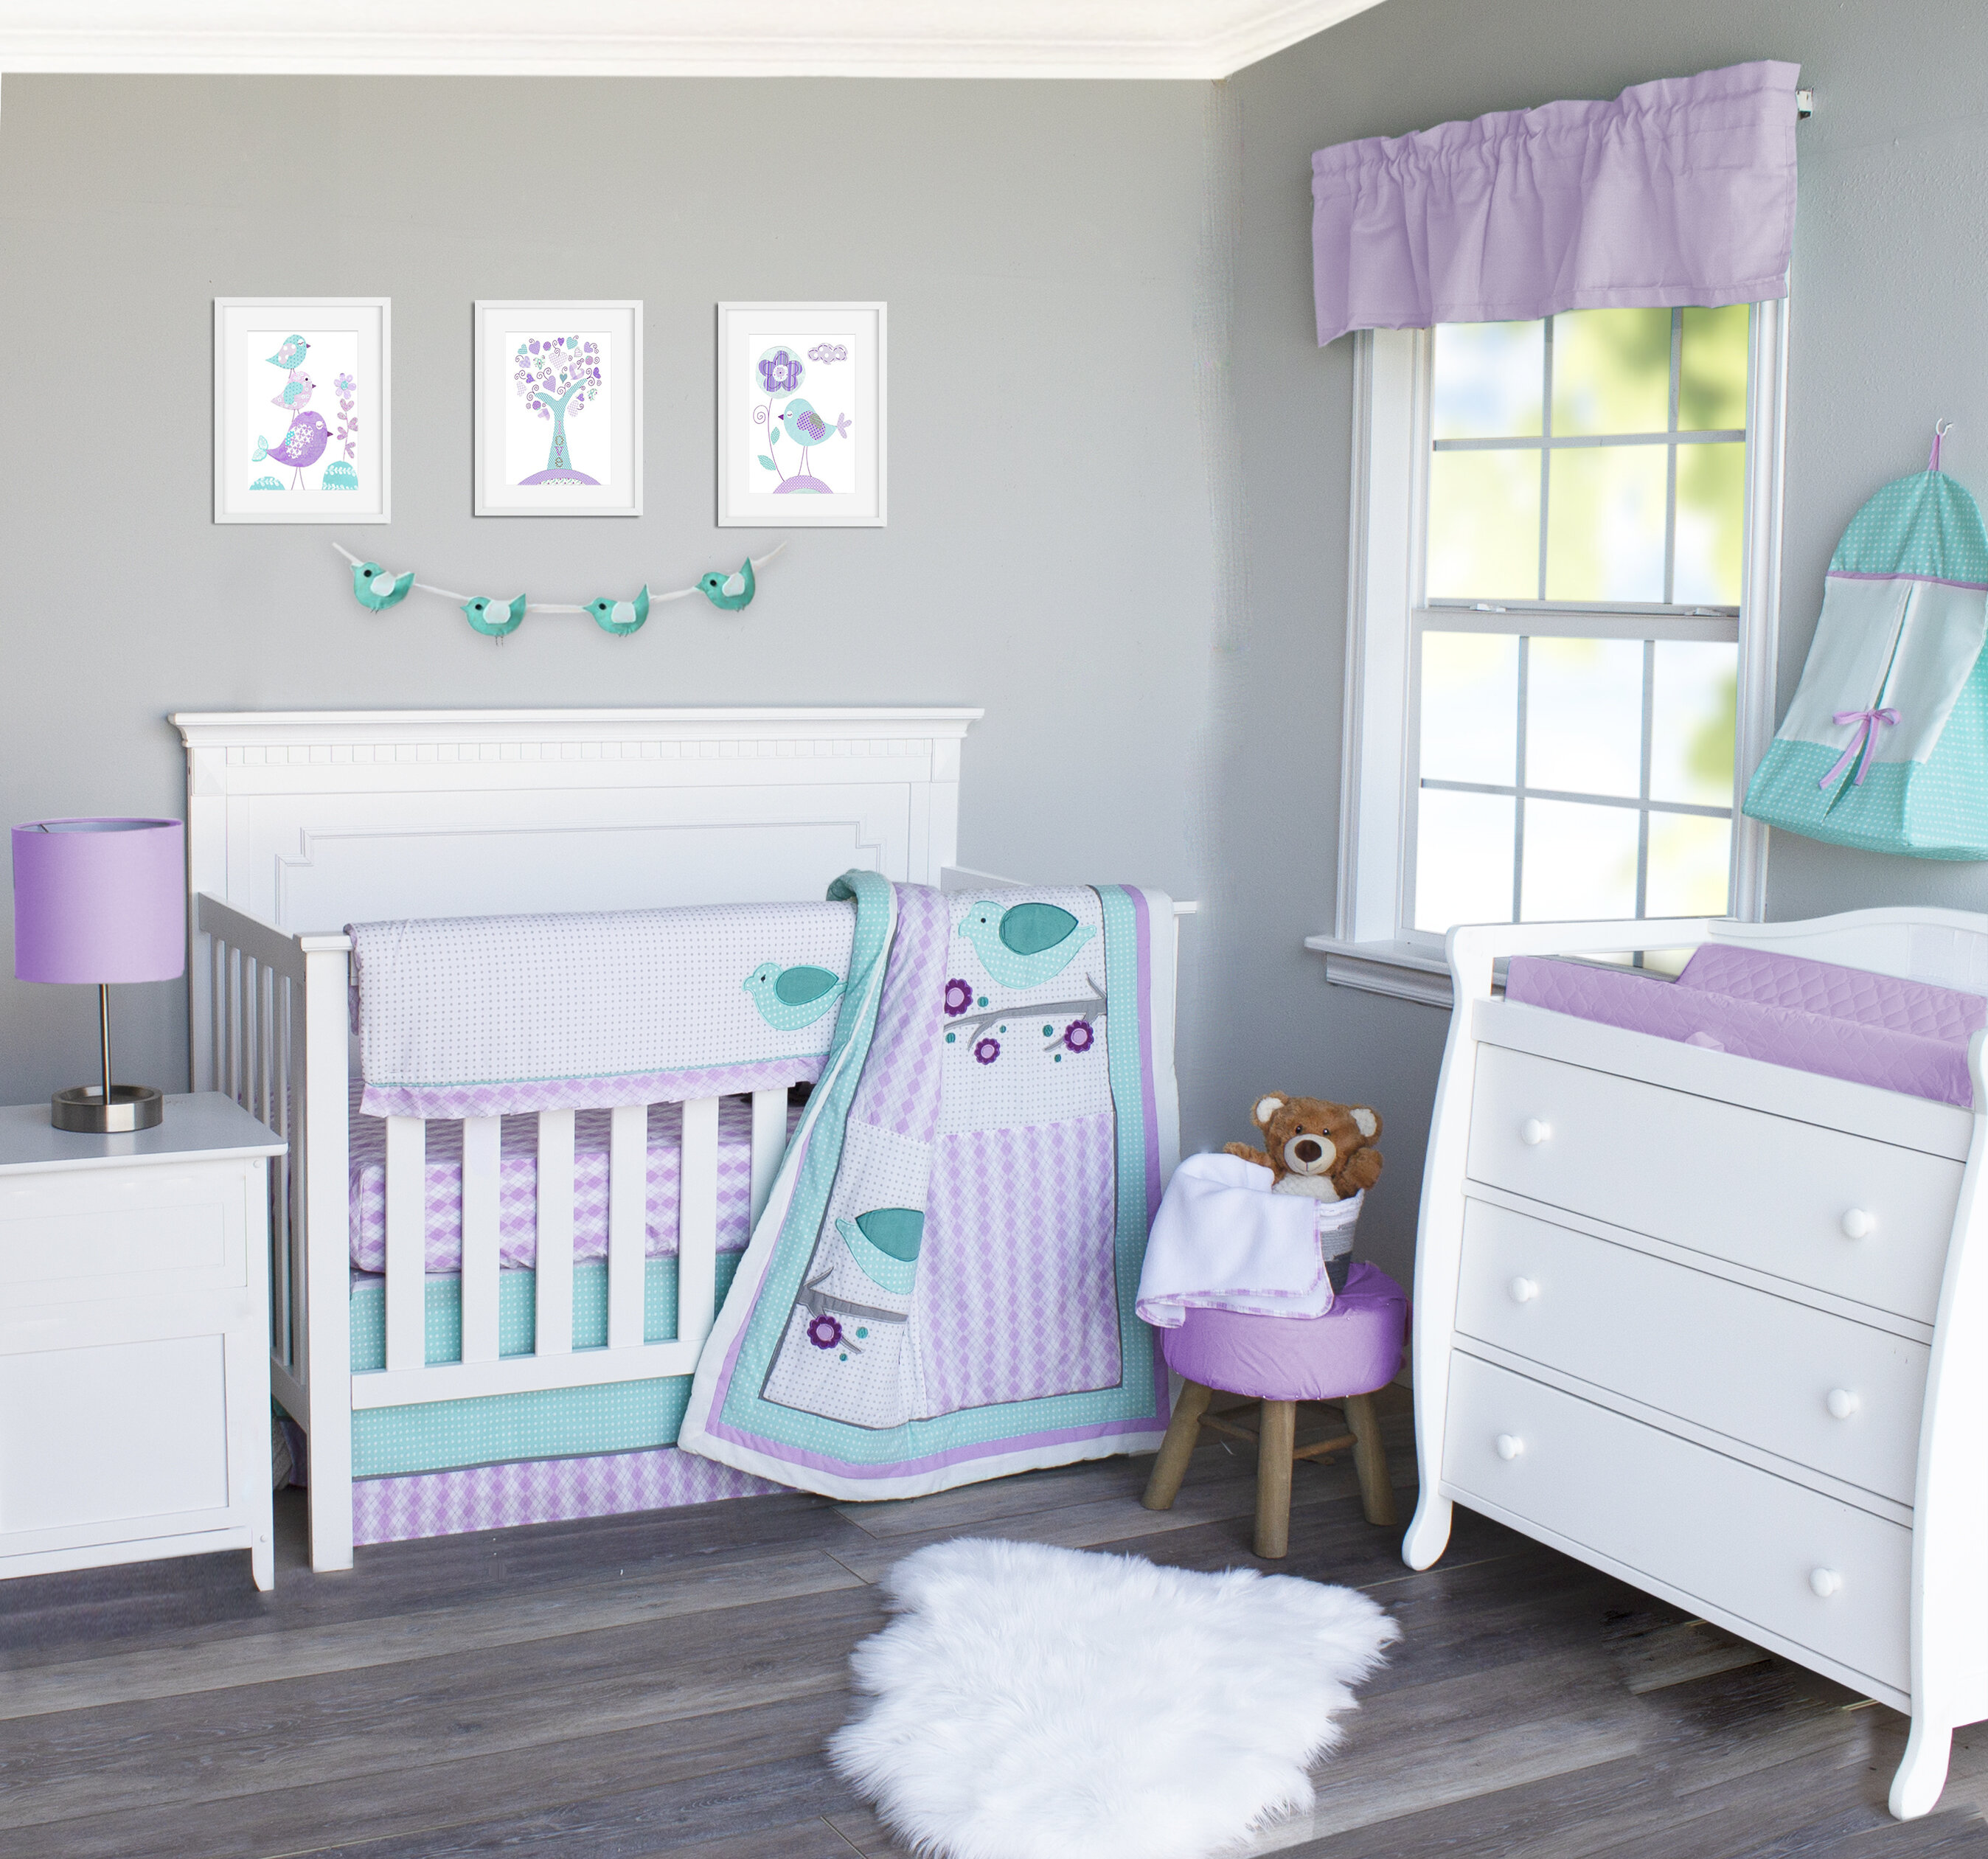 purple and teal crib bedding sets